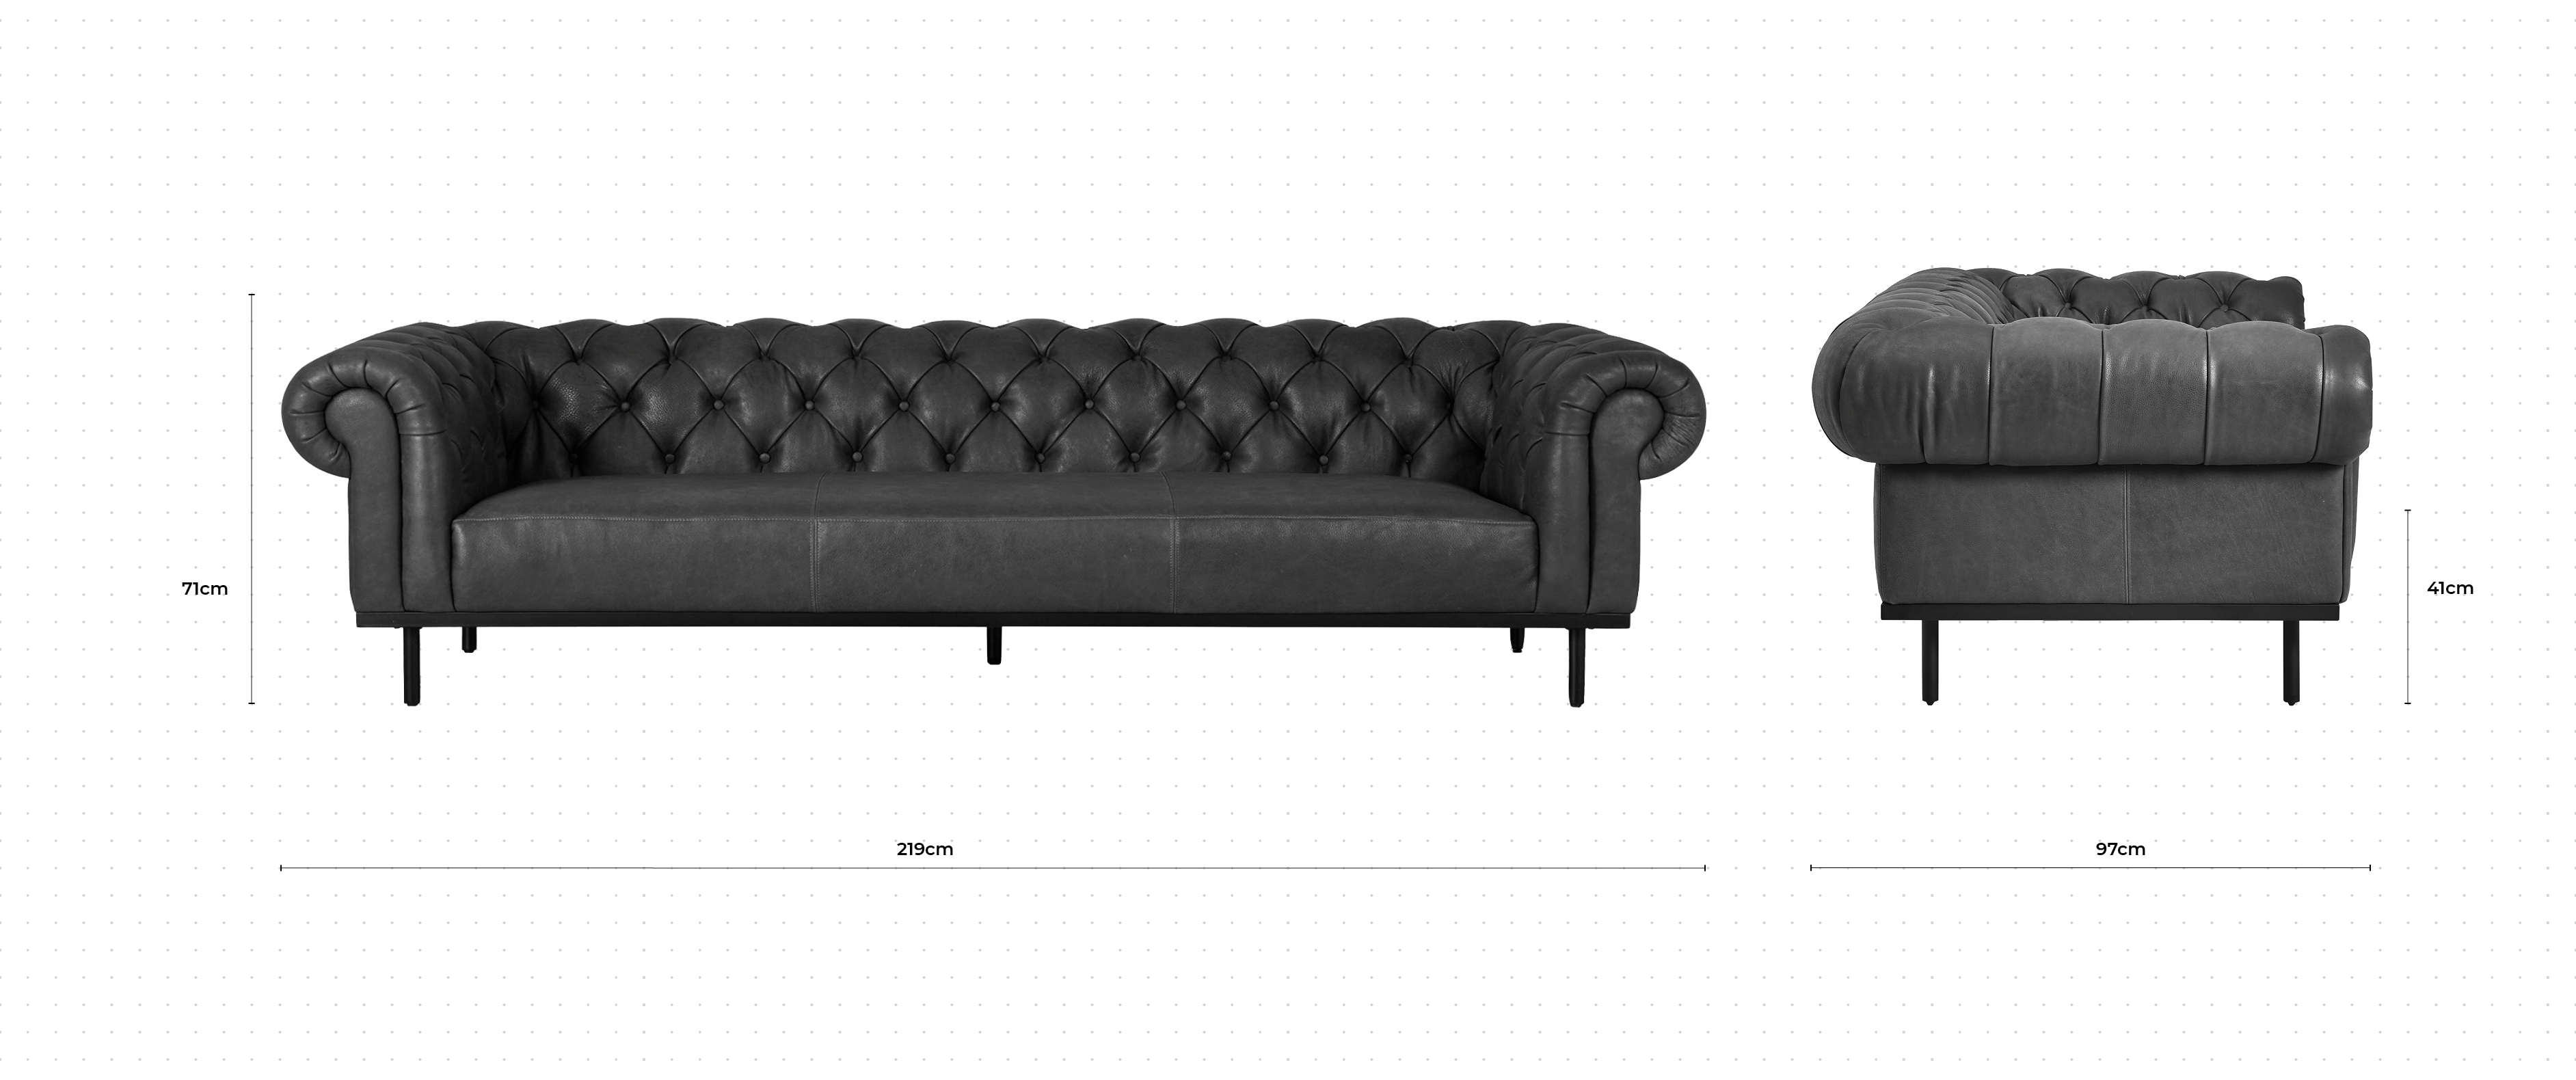 Parfait 3 Seater Sofa dimensions